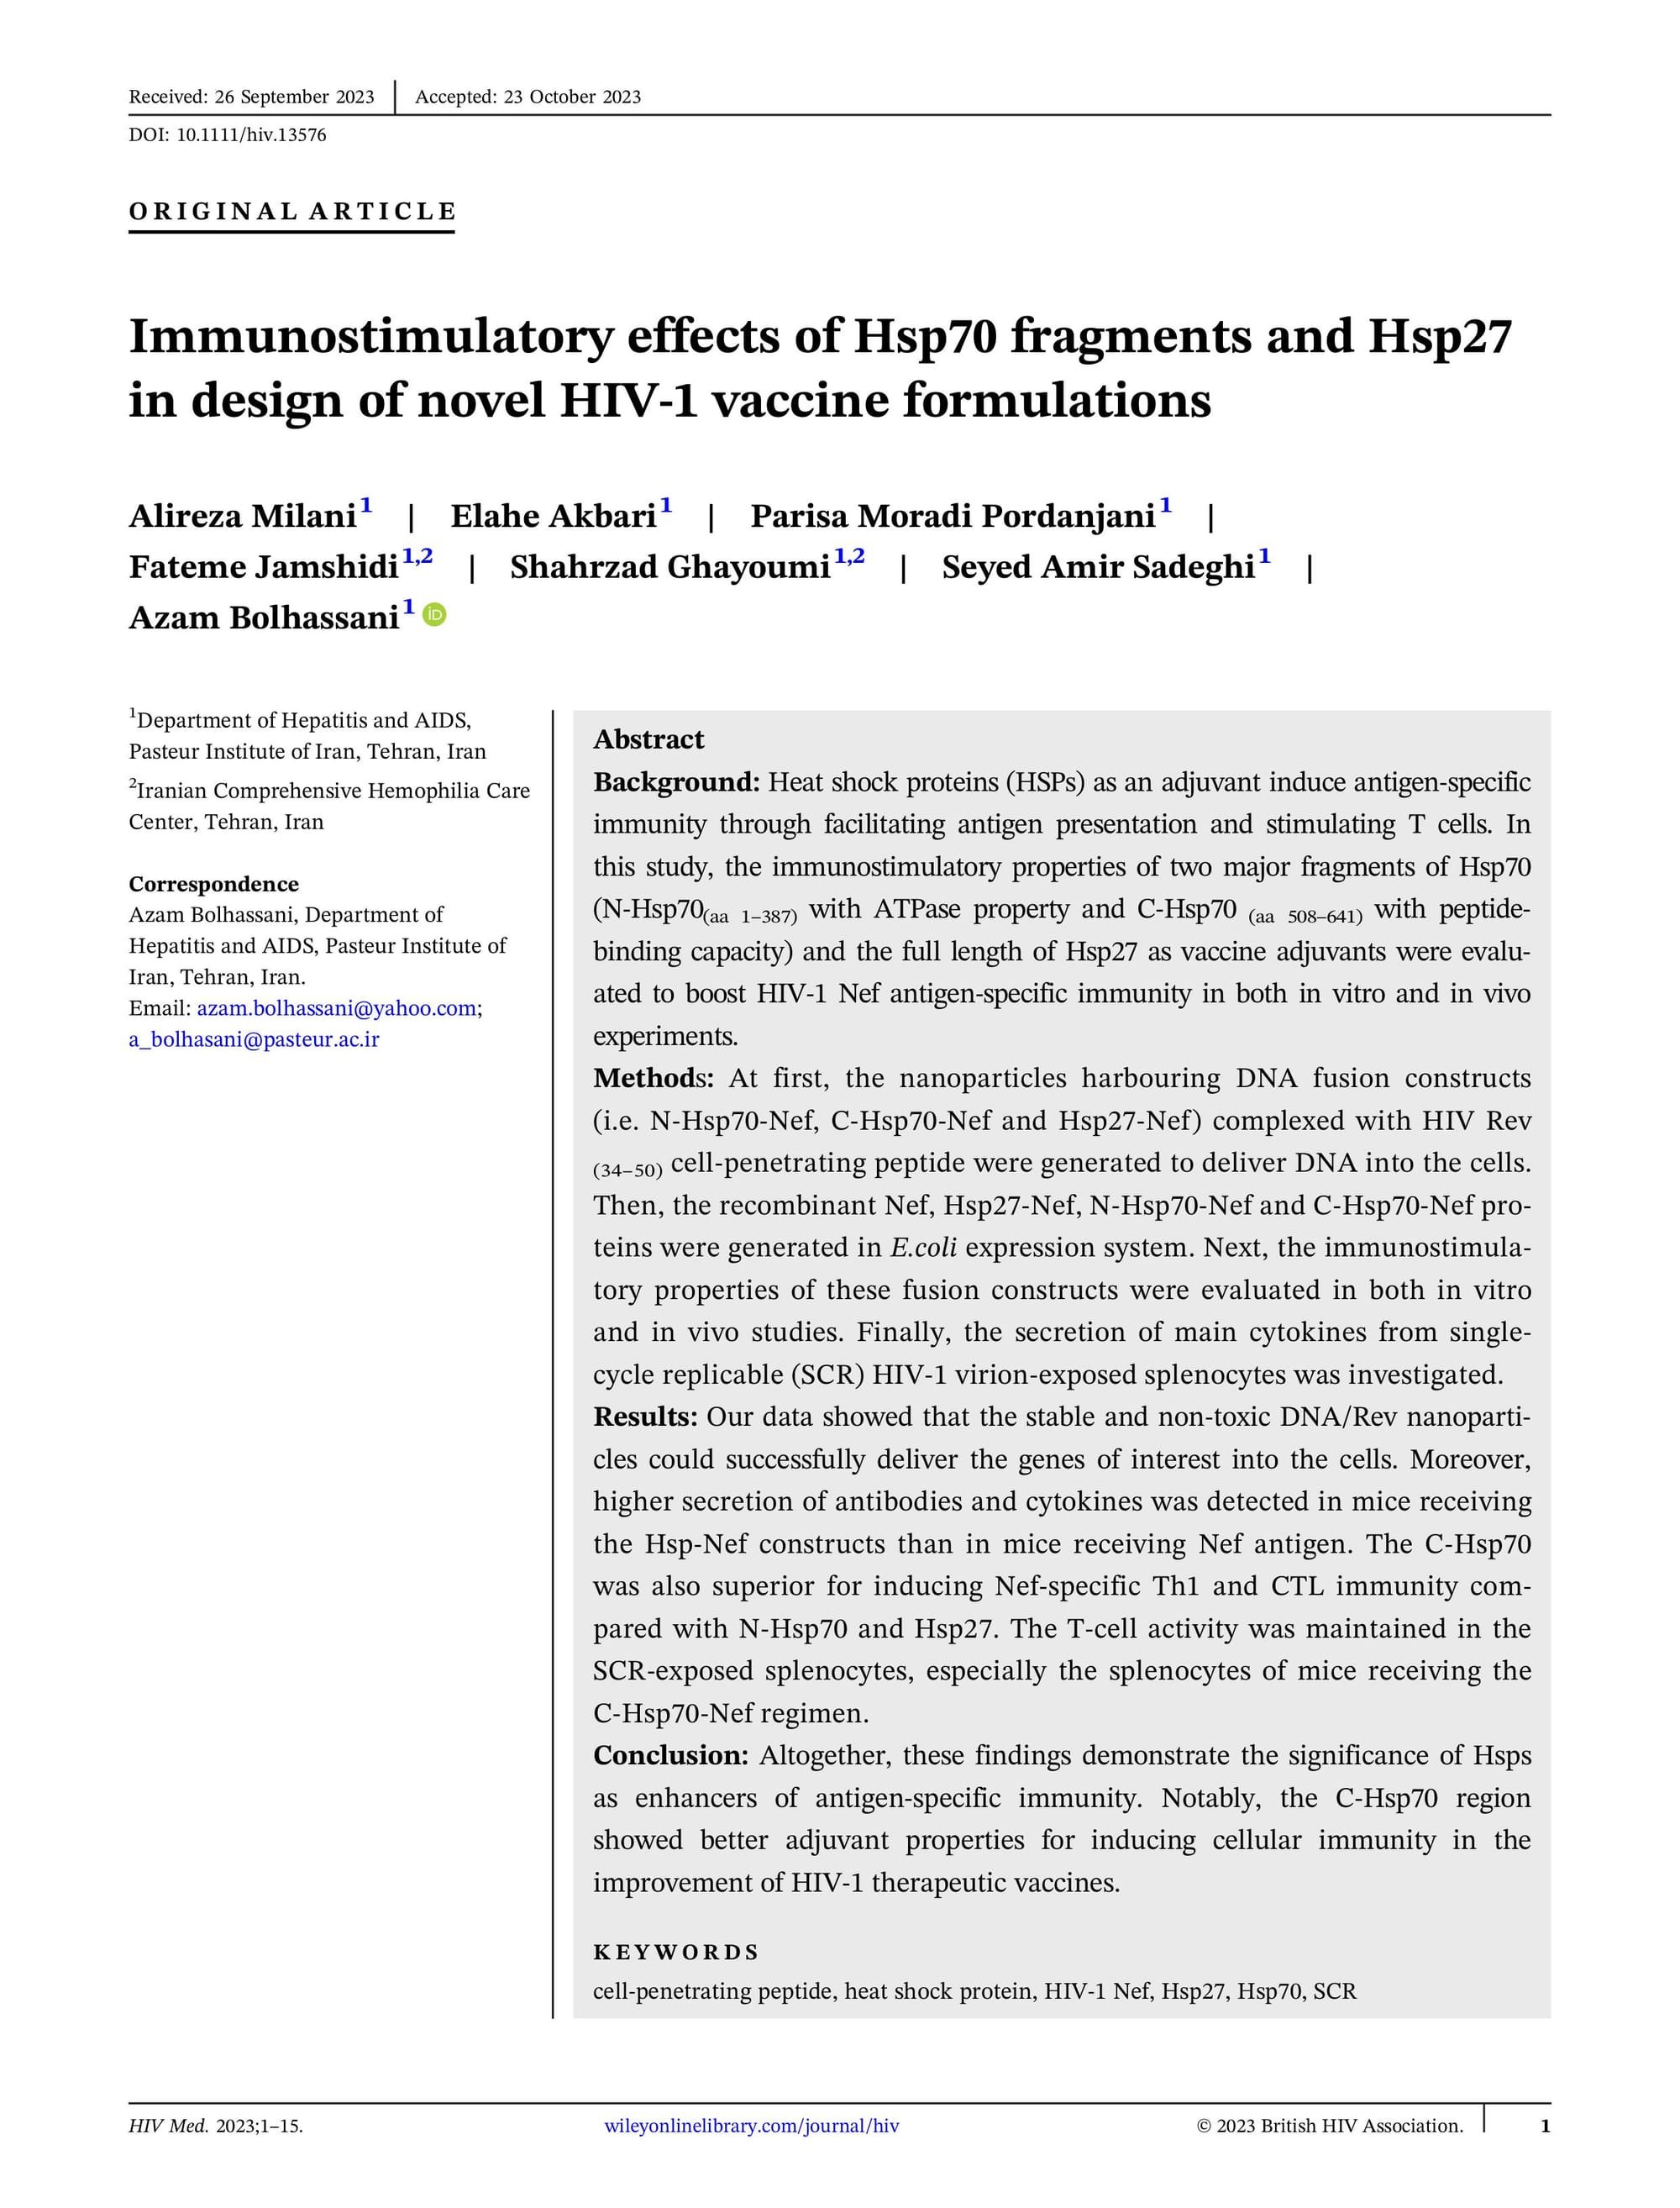 Immunostimulatory effects of Hsp70 fragments and Hsp27 in design of novel HIV‐1 vaccine formulations.